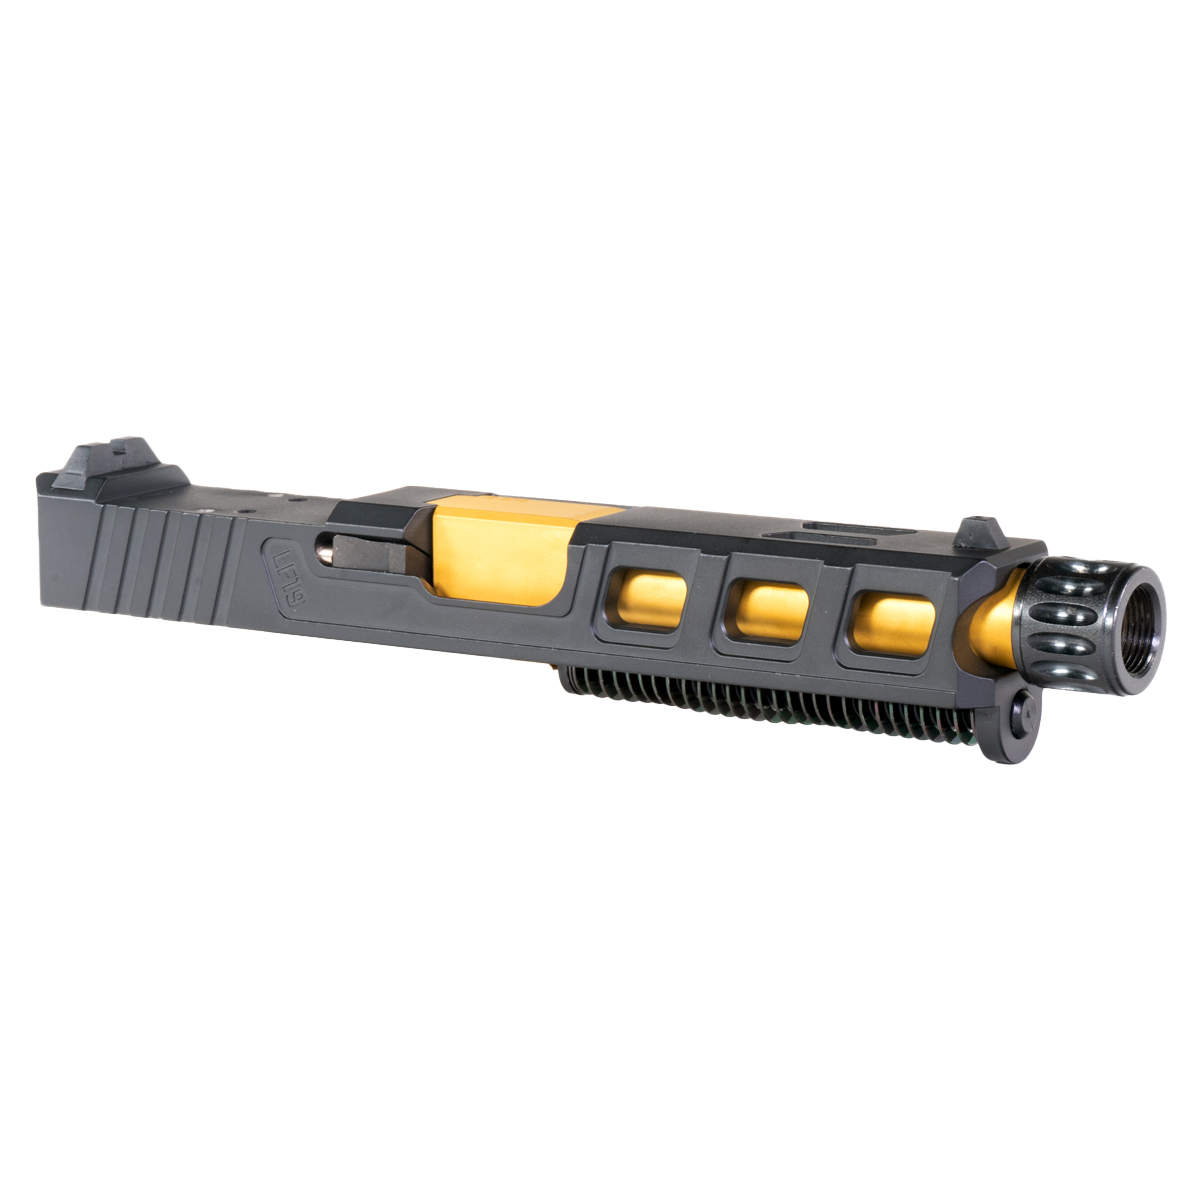 DTT 'Auge' 9mm Complete Slide Kit - Glock 19 Gen 1-3 Compatible